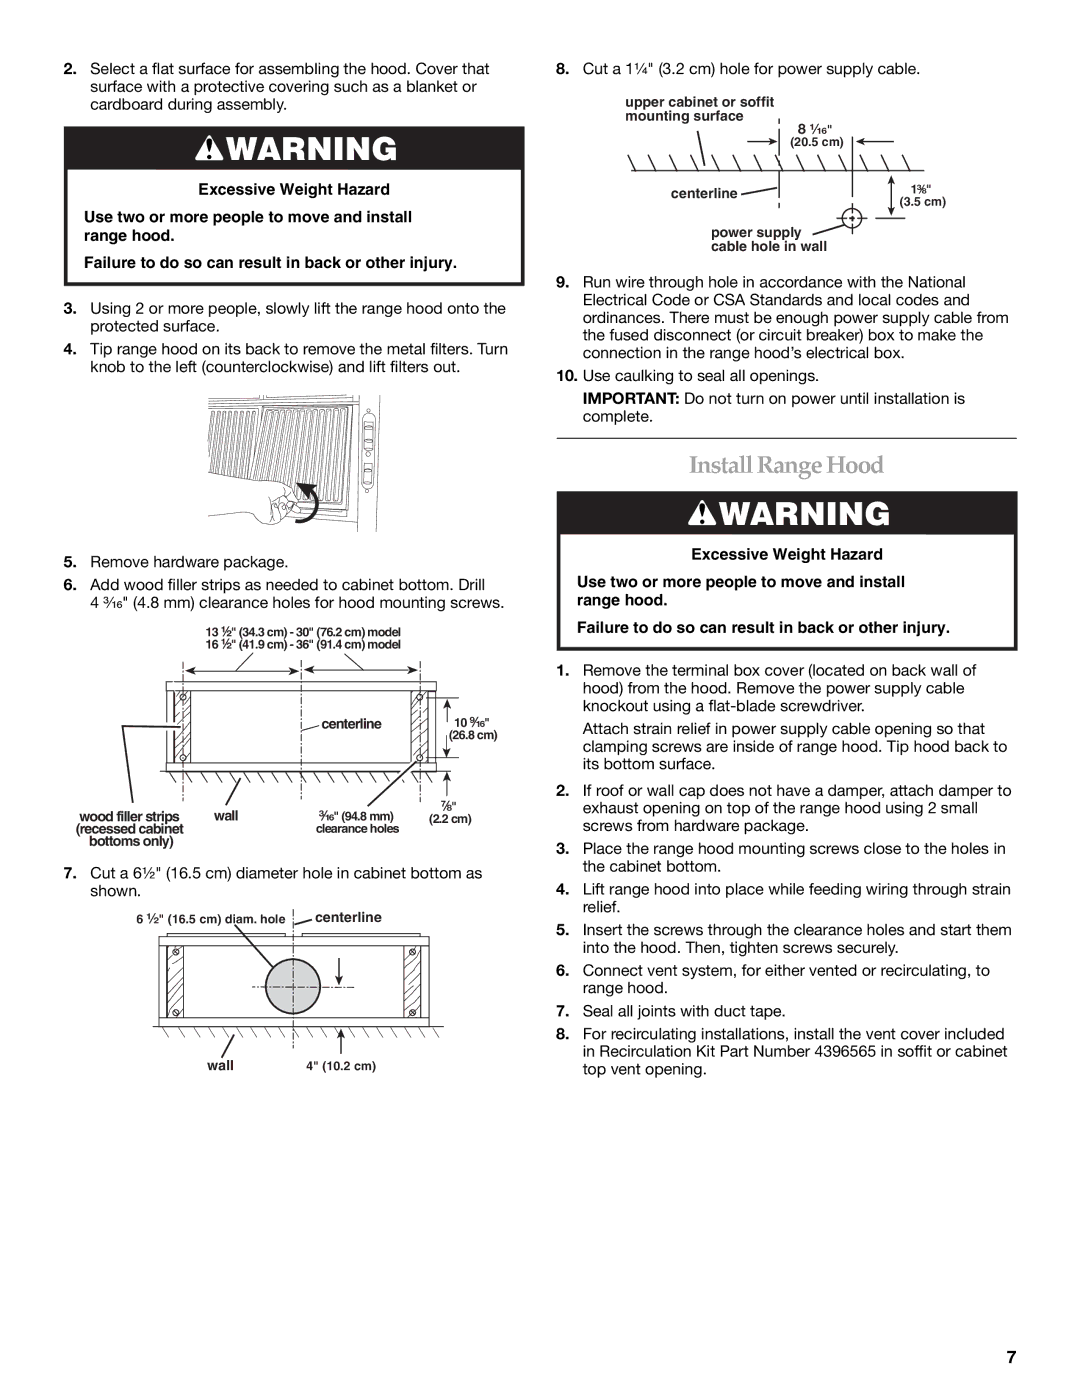 KitchenAid RangeHood installation instructions Install Range Hood, Cut a 1¹⁄₄ 3.2 cm hole for power supply cable 